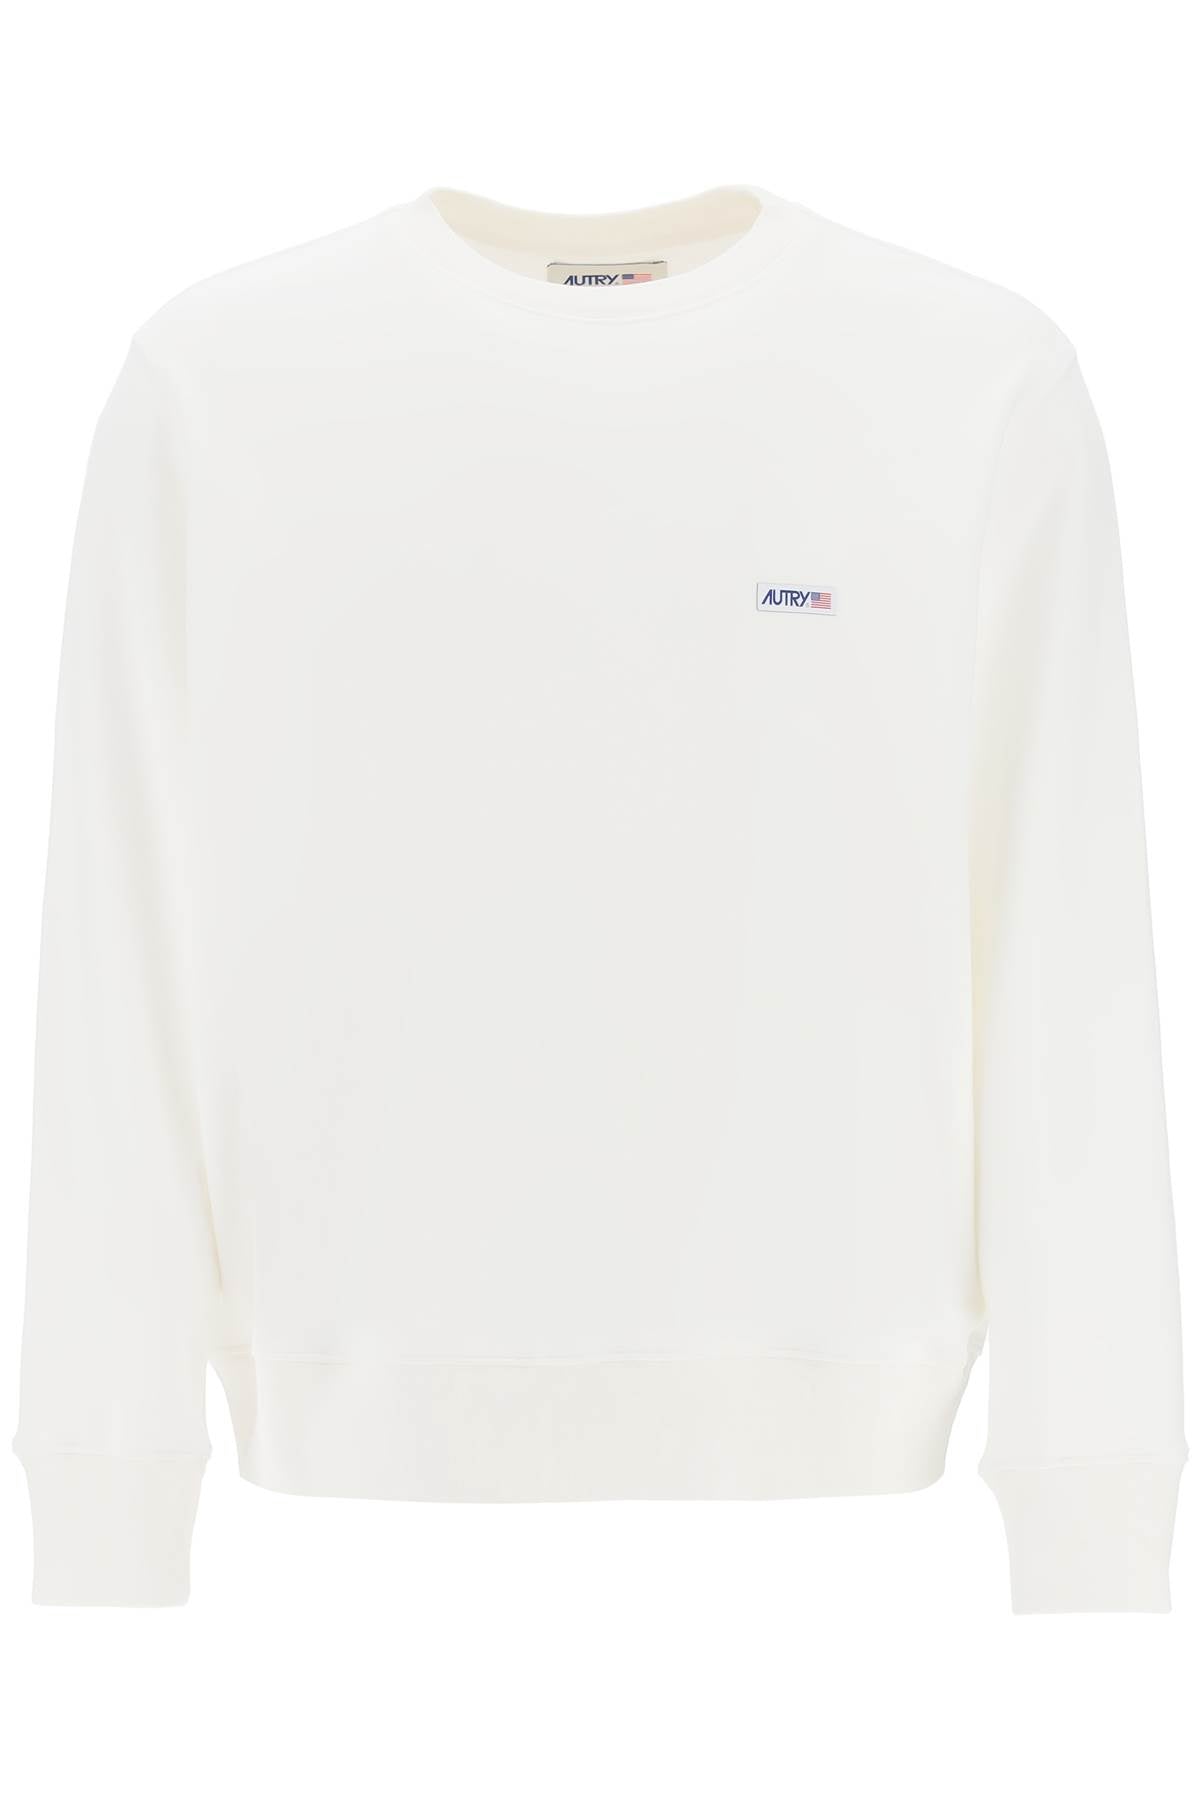 Autry sweatshirt with logo label-0